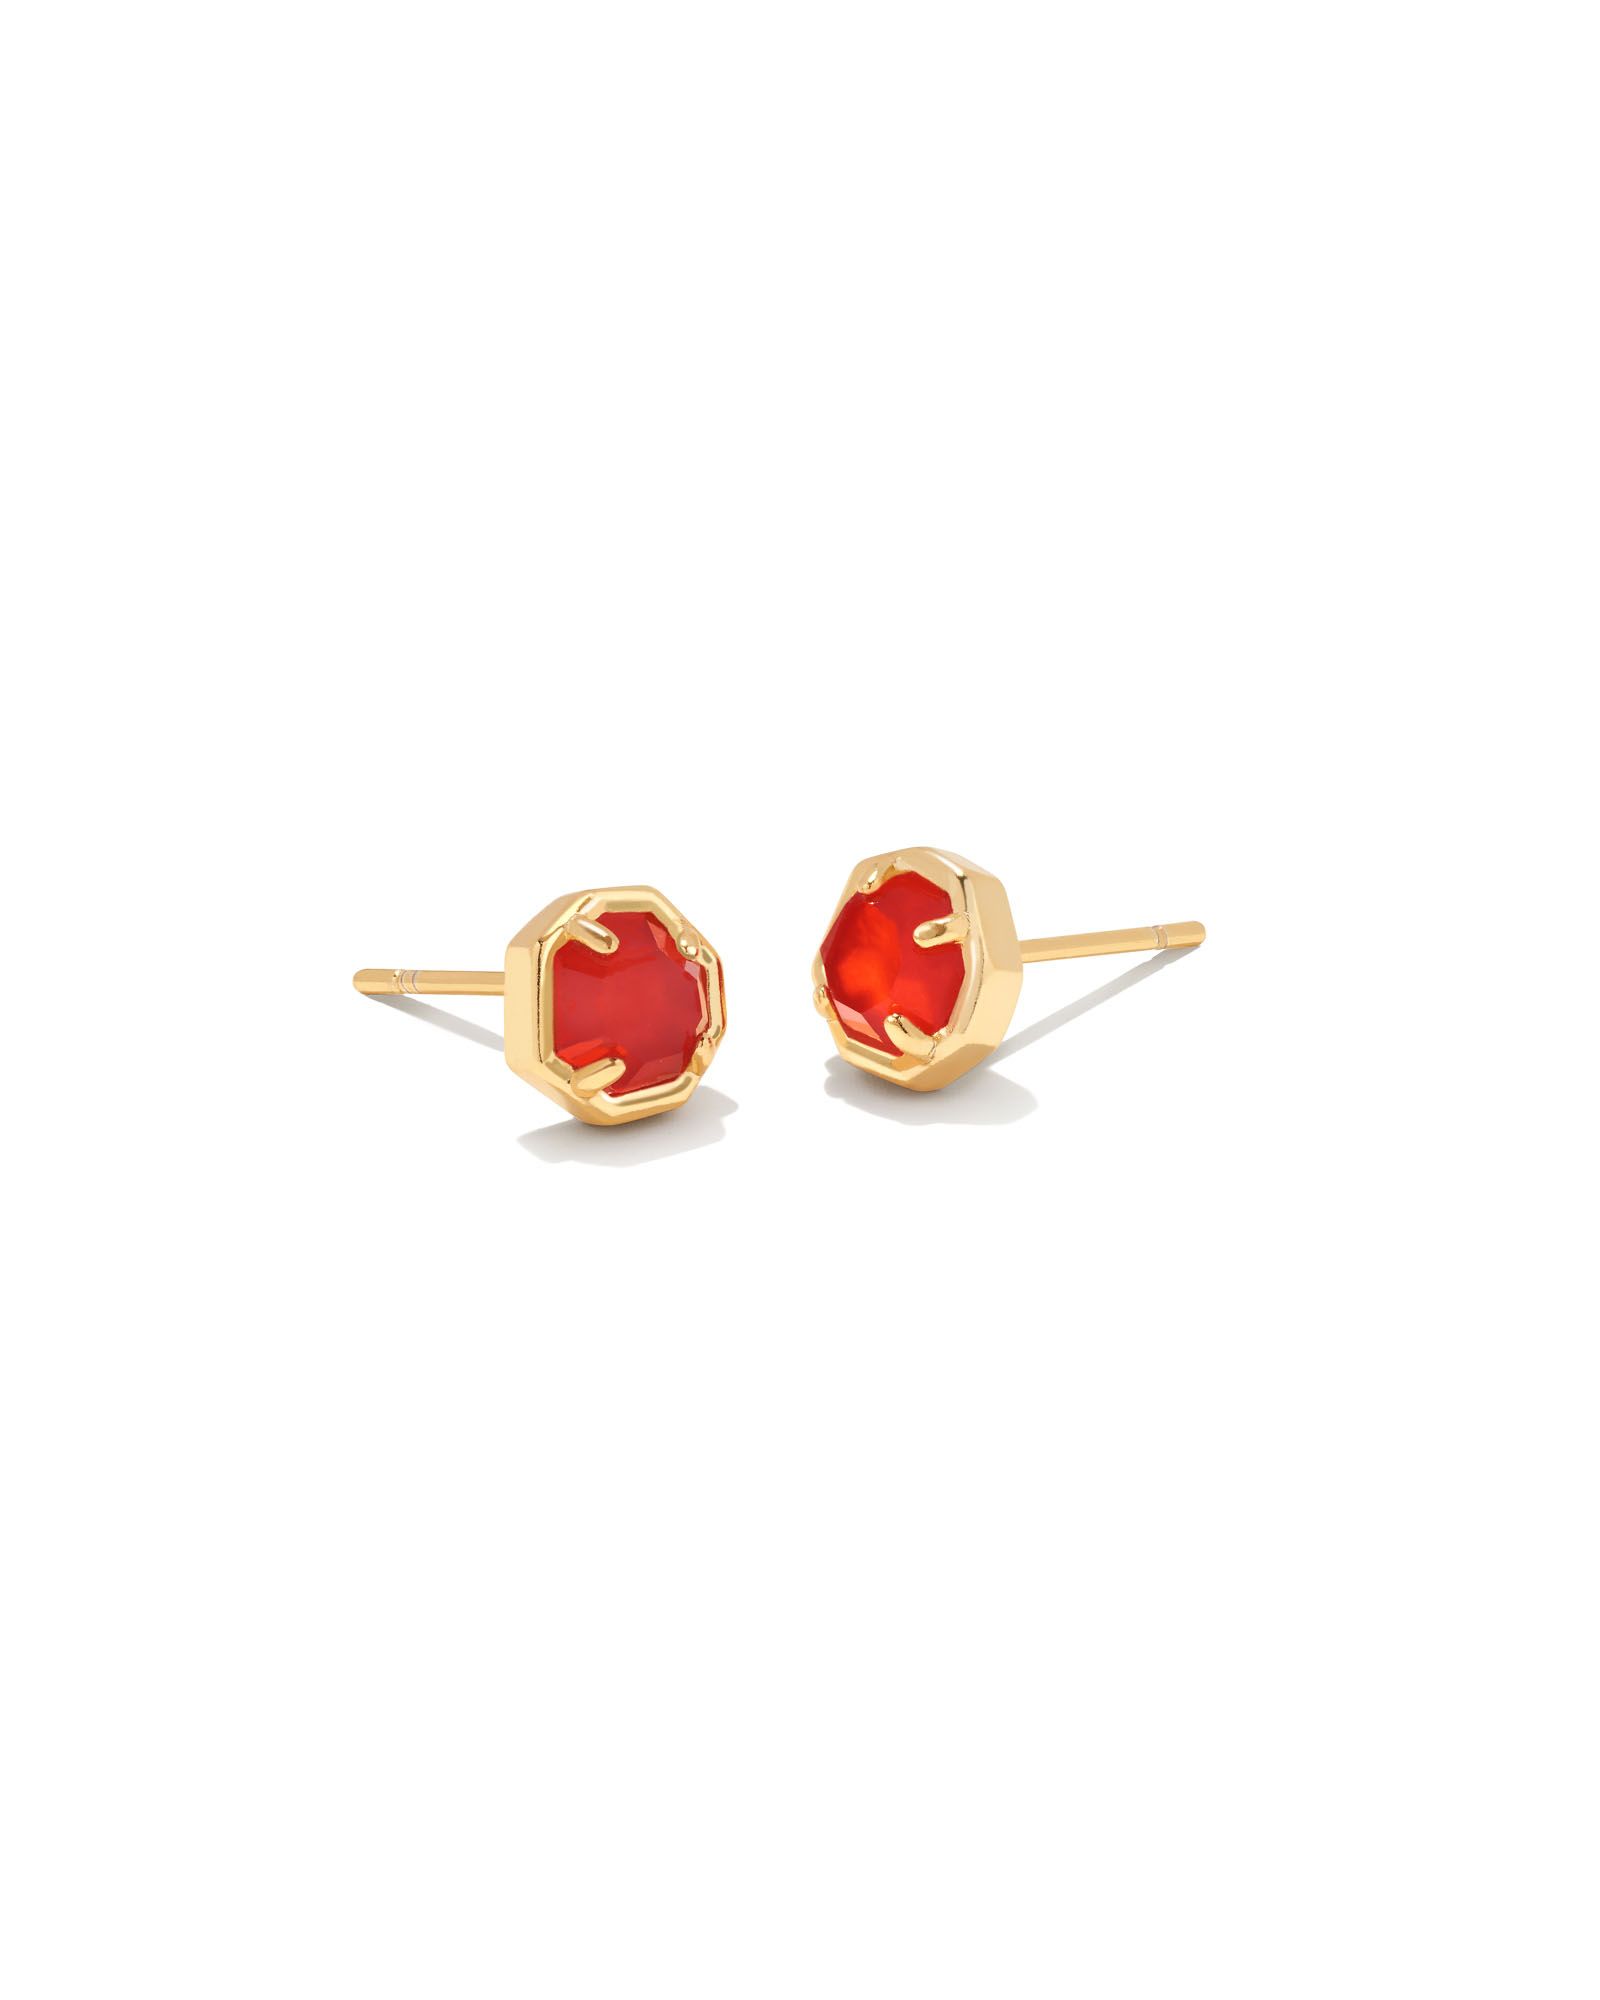 Nola Gold Stud Earrings in Red Illusion | Kendra Scott